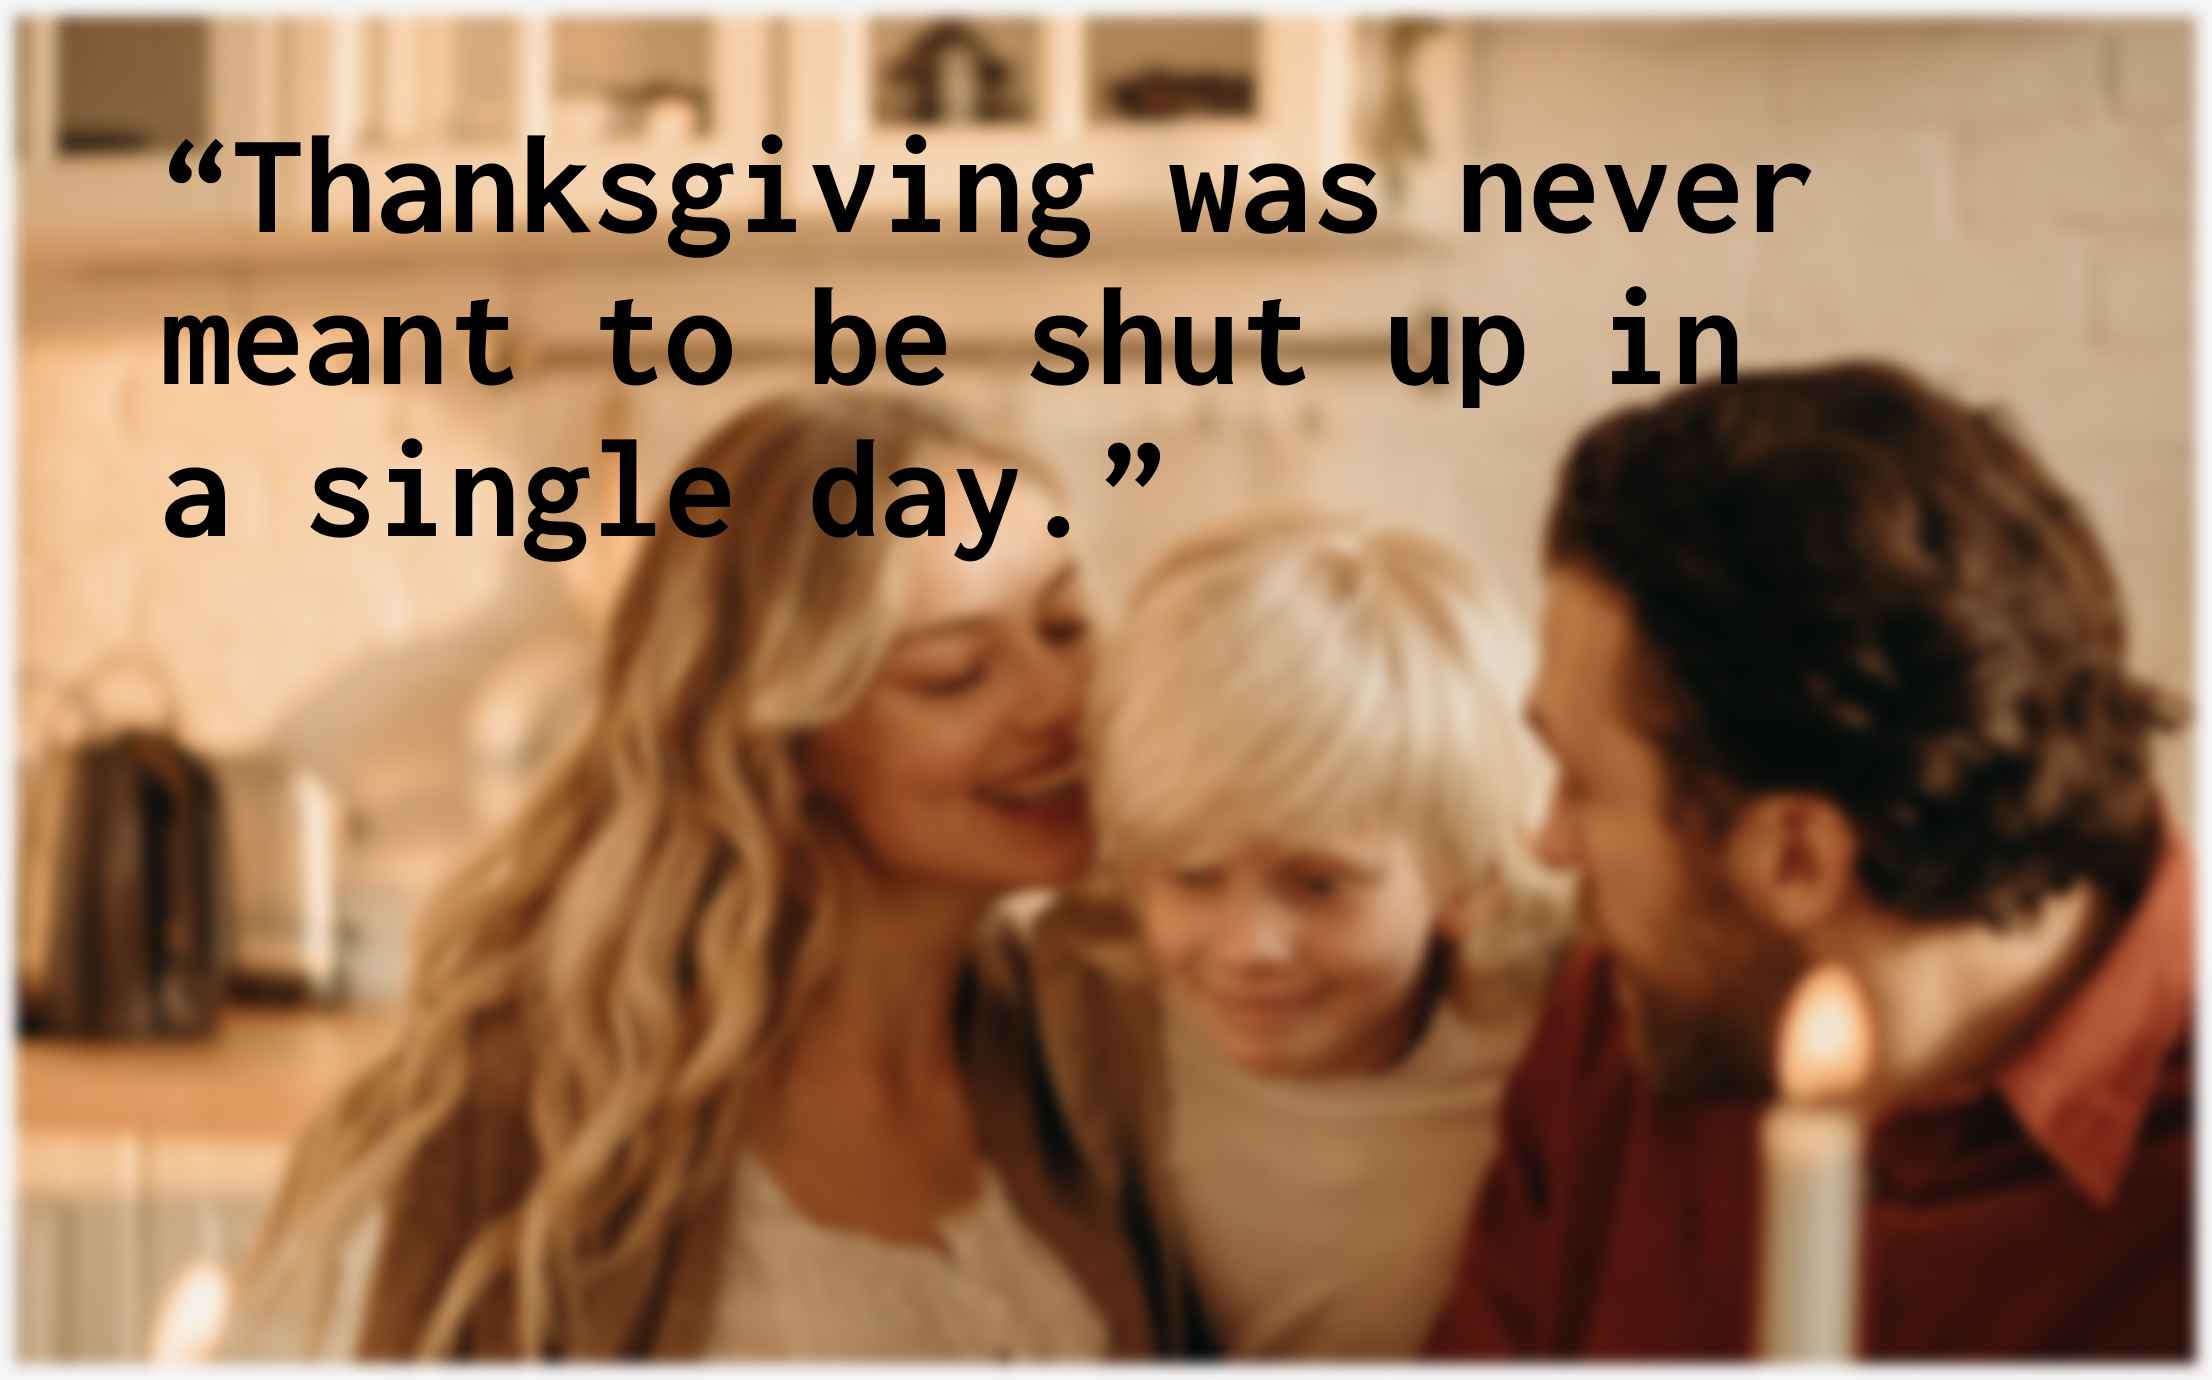 Happy family enjoying Thanksgiving